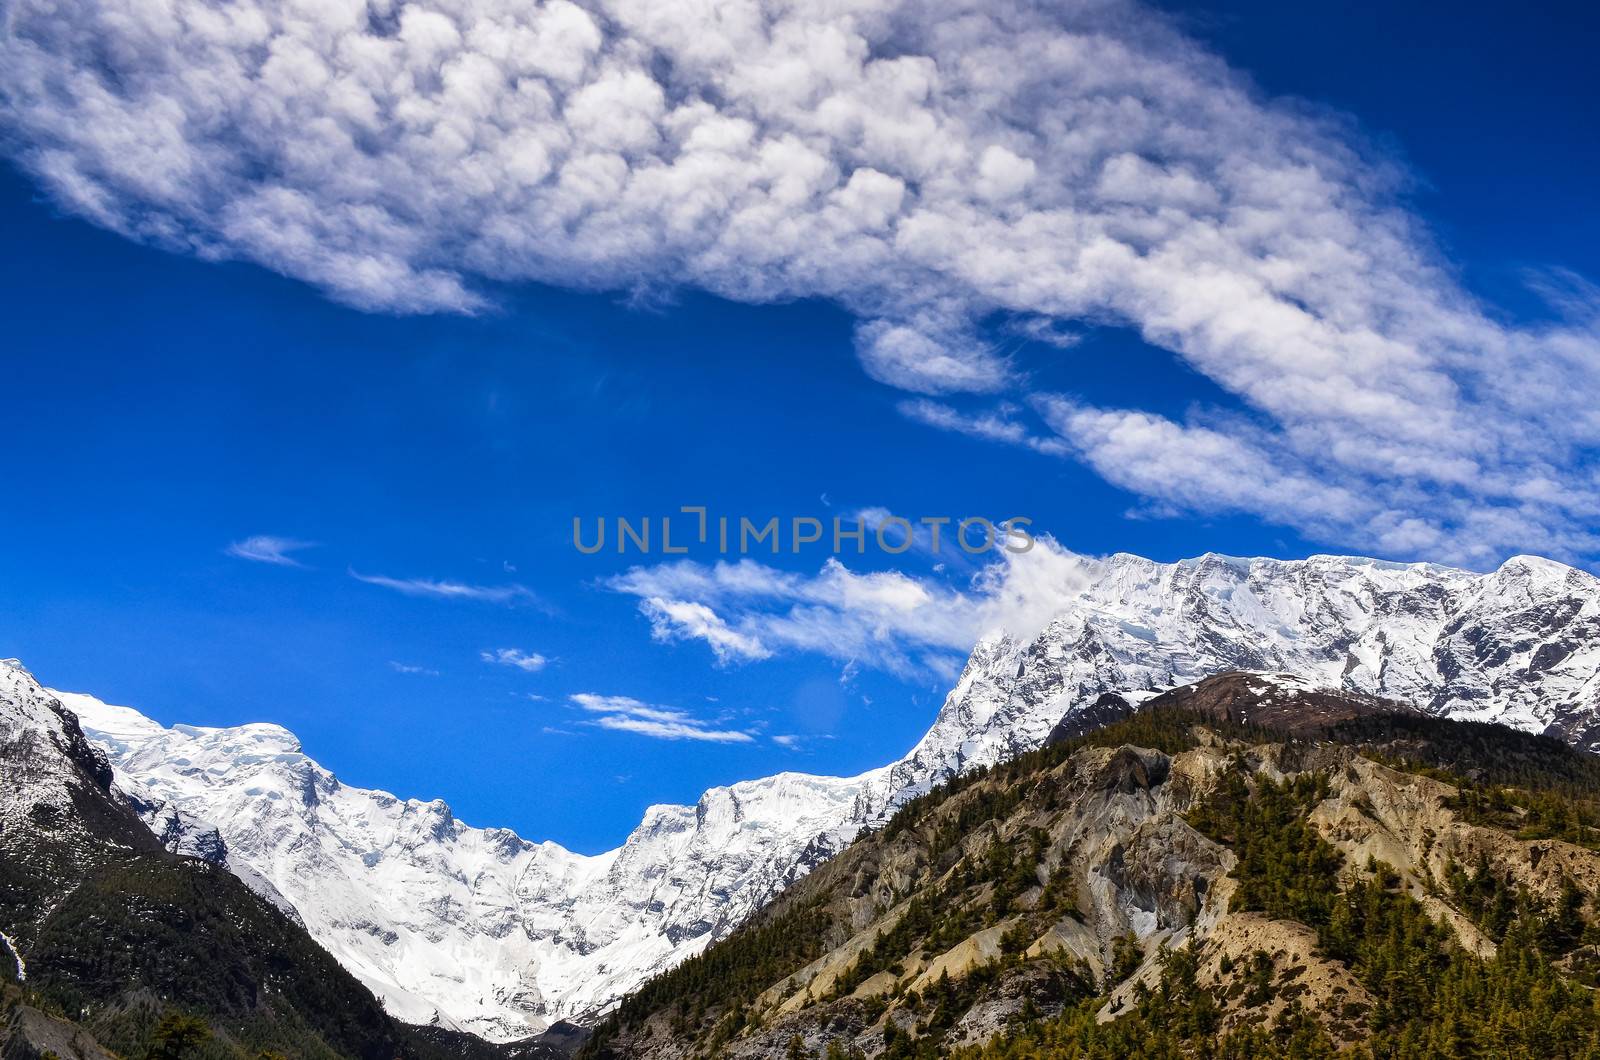 Himalayas mountain range in Annapurna region by martinm303